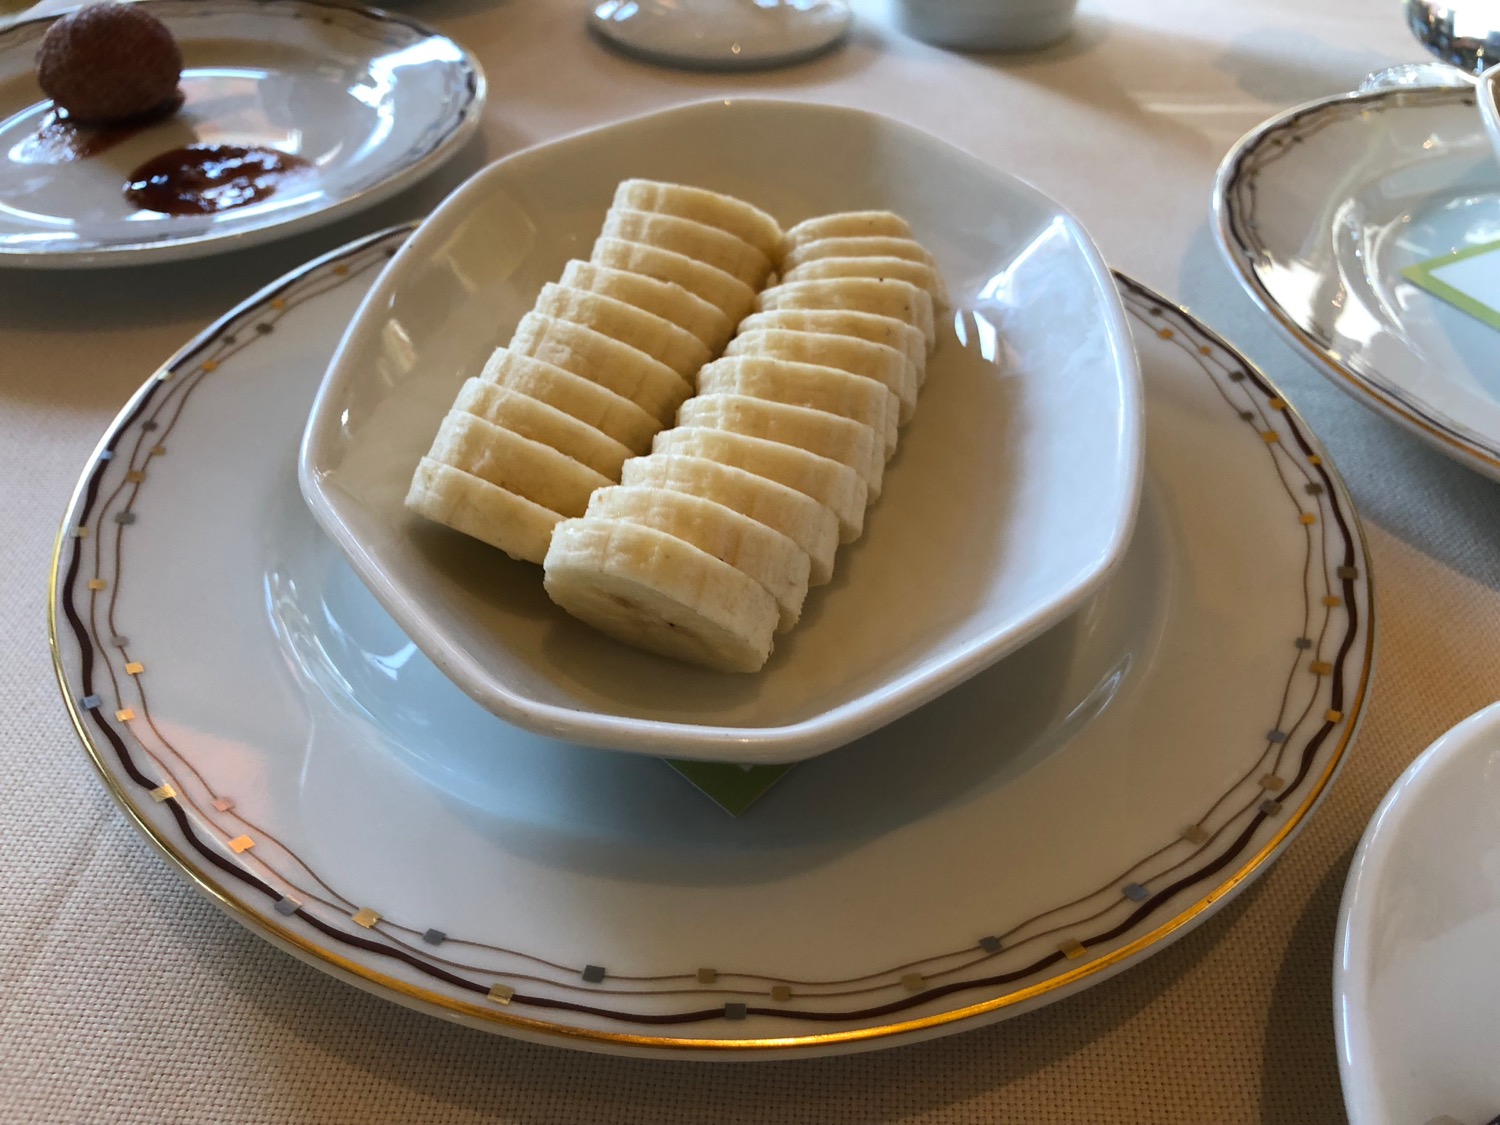 a plate of sliced bananas